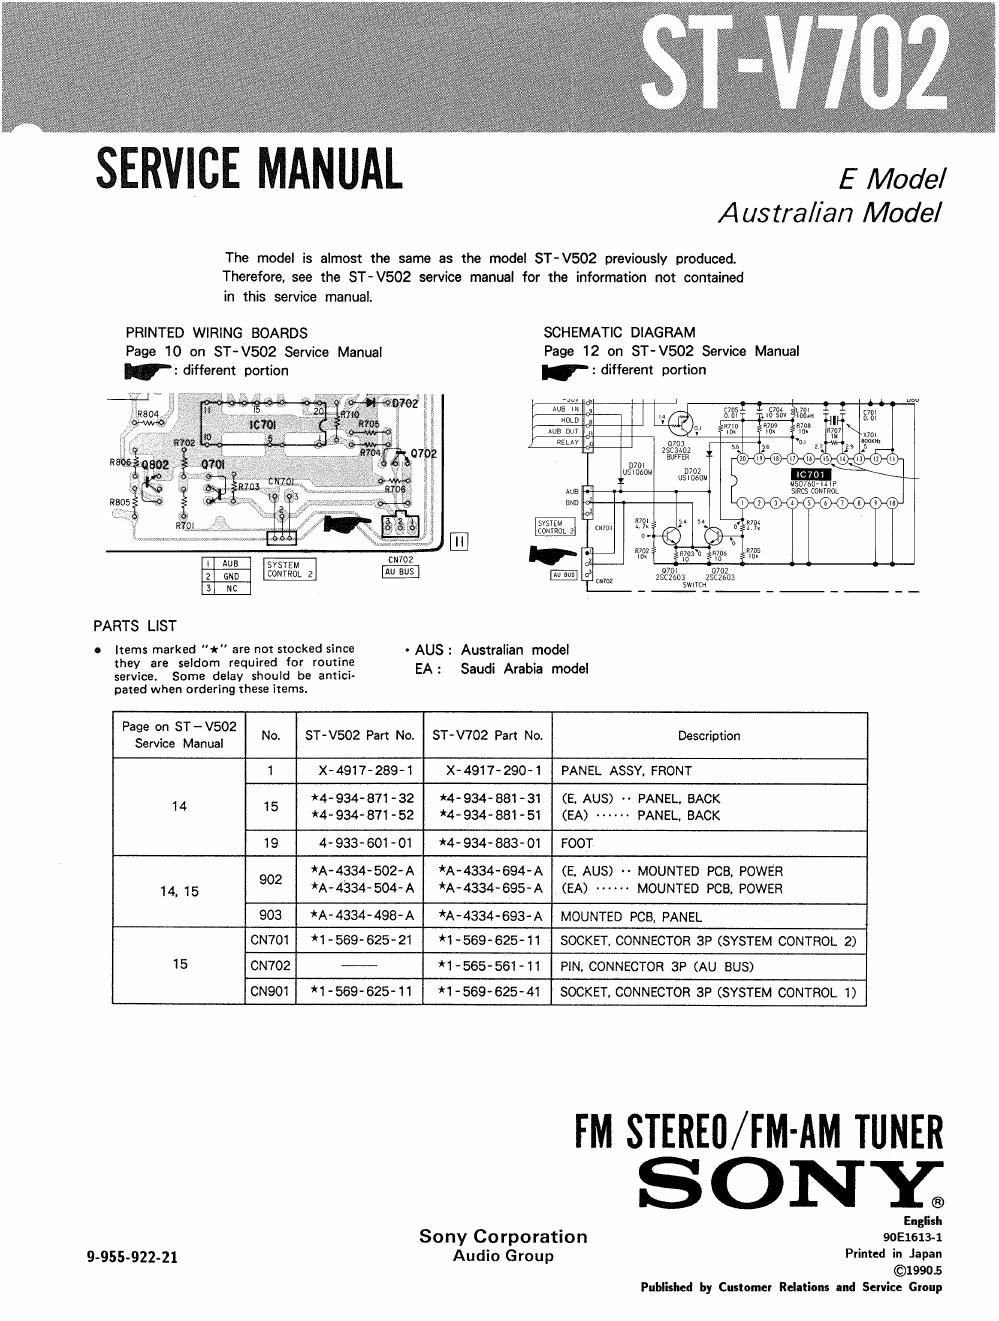 sony st v 702 service manual